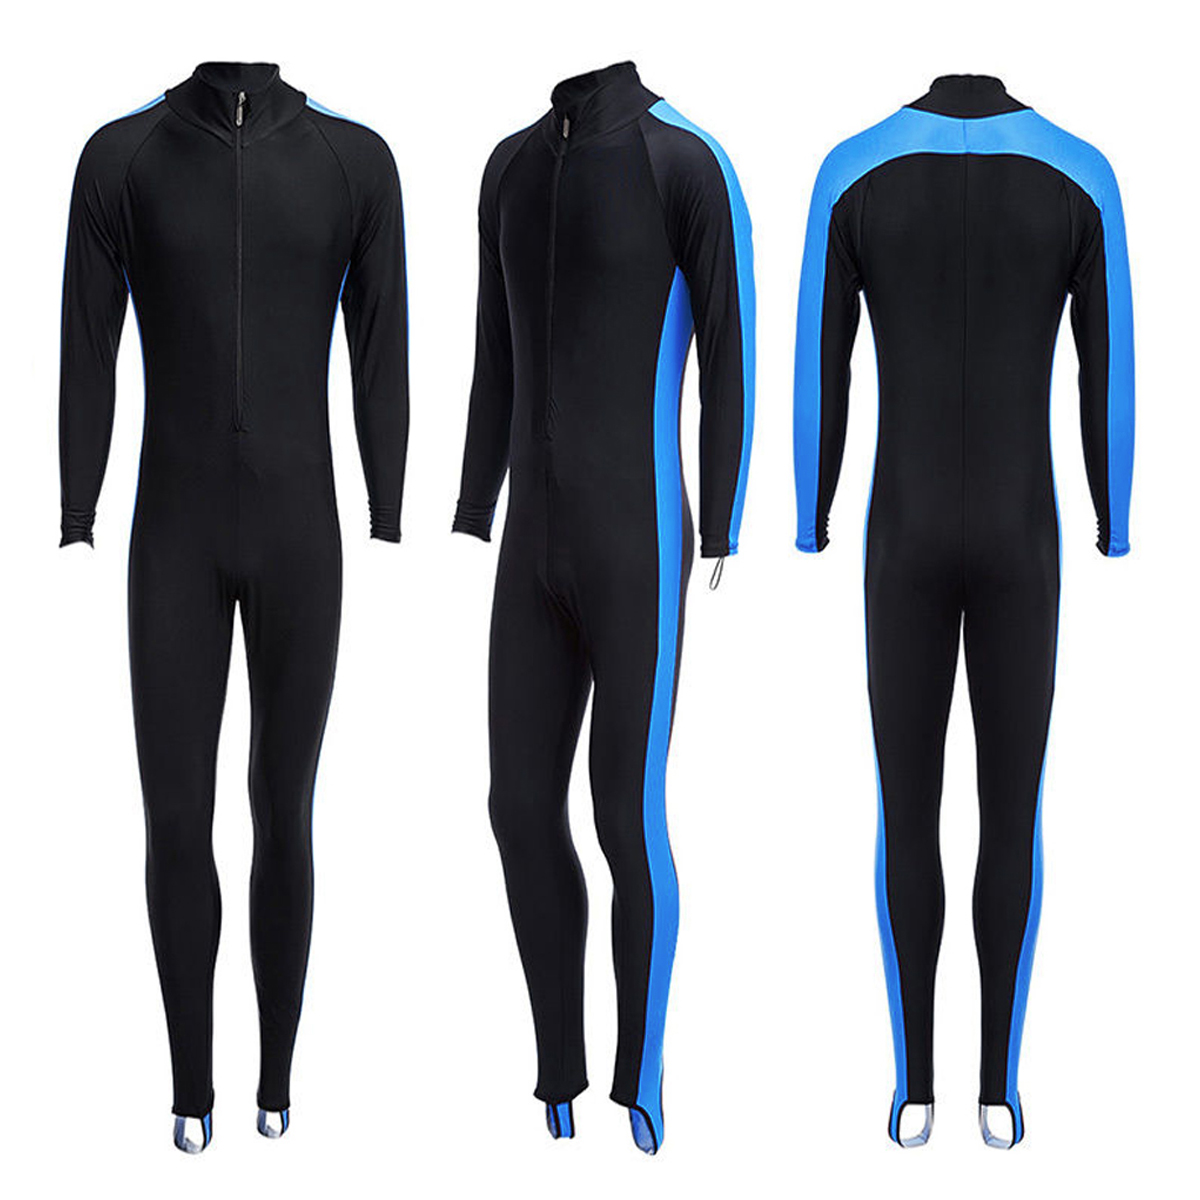 Unisex-Full-Body-Diving-Suit-Men-Women-Scuba-Diving-Wetsuit-Swimming-Surfing-UV-Protection-Snorkelin-1714664-11